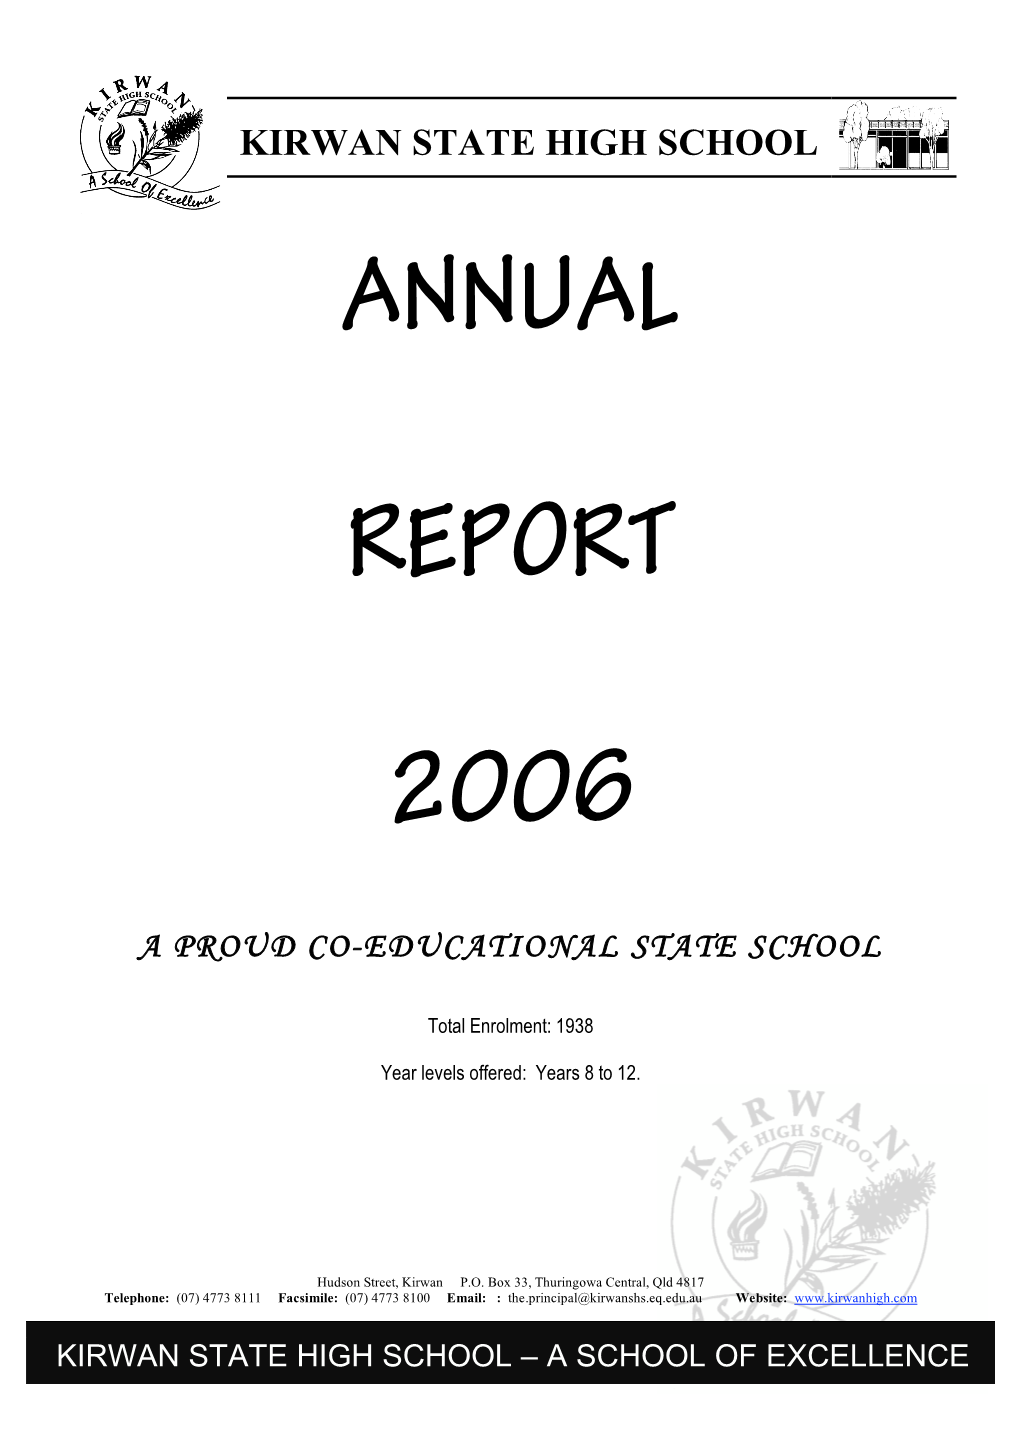 School Annual Report 2006